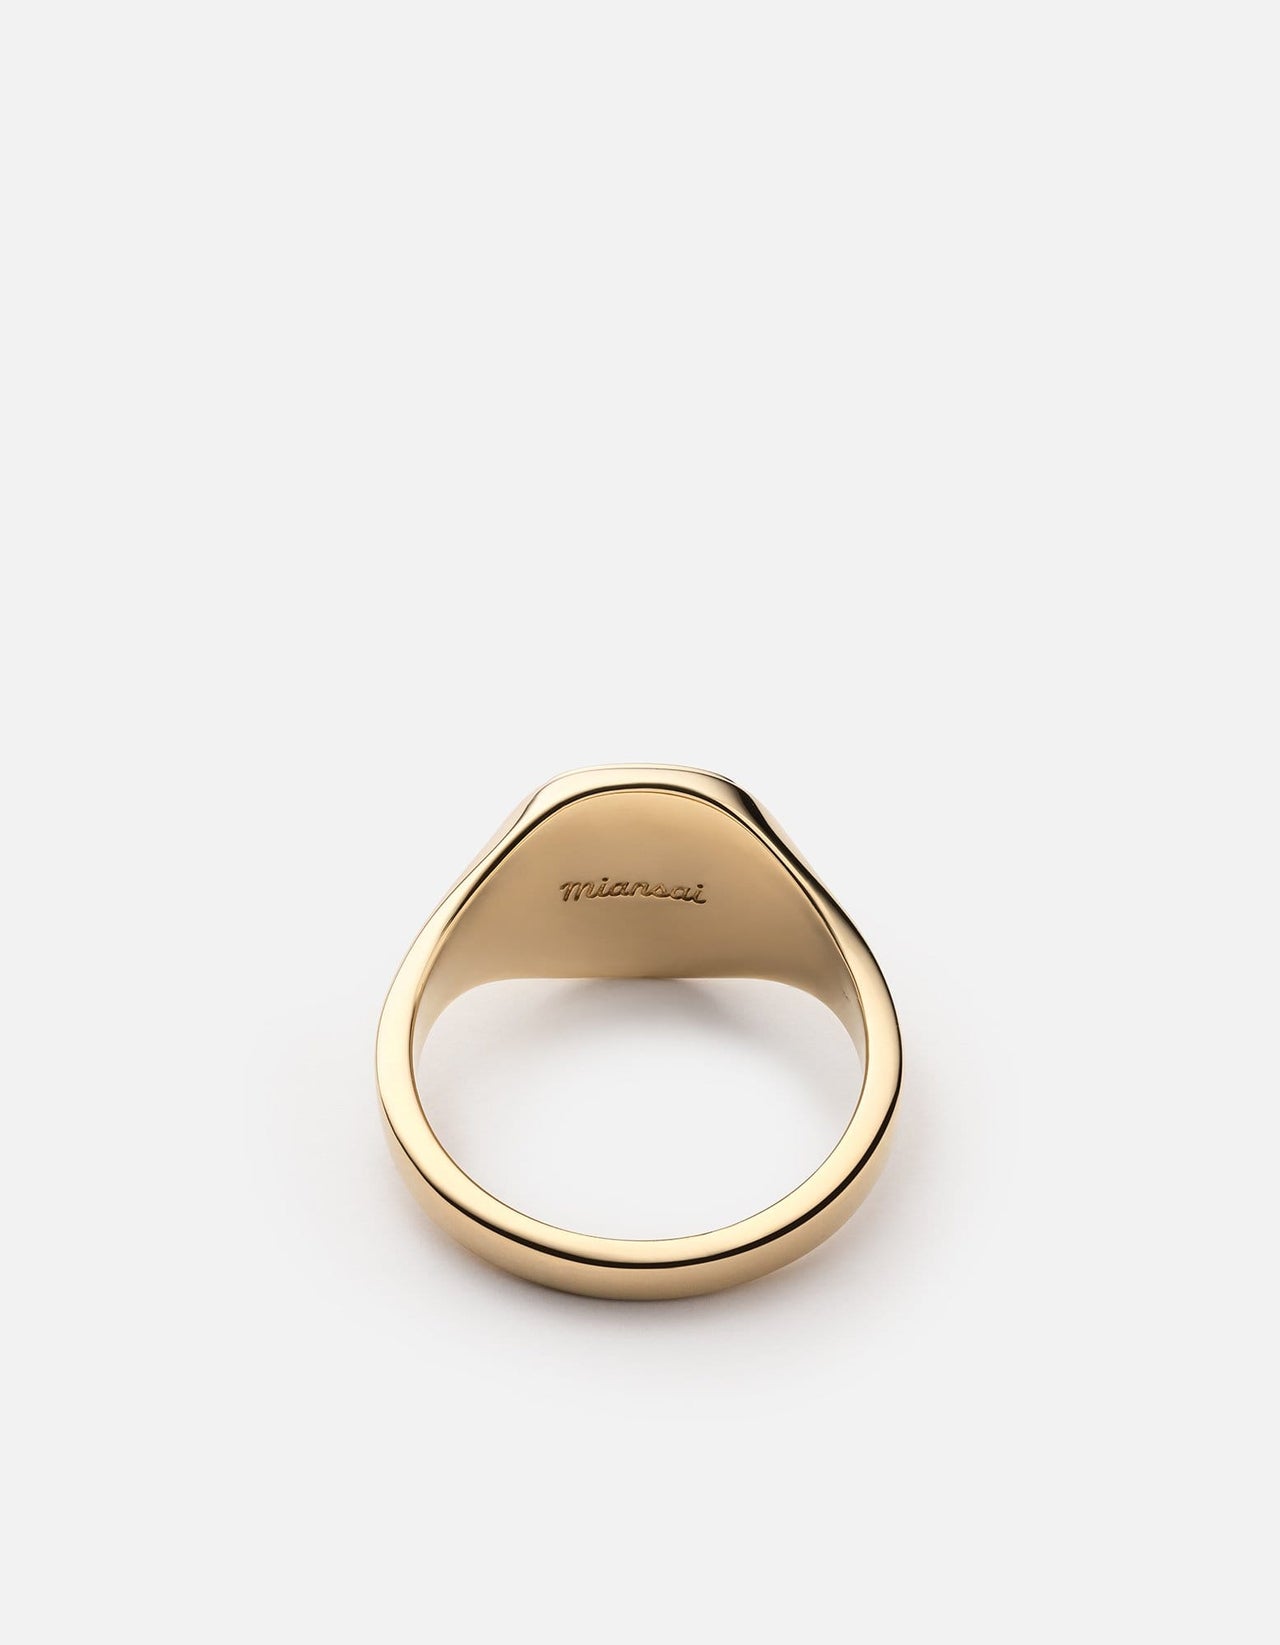 Square Step Ring, Gold Vermeil | Men's Rings | Miansai